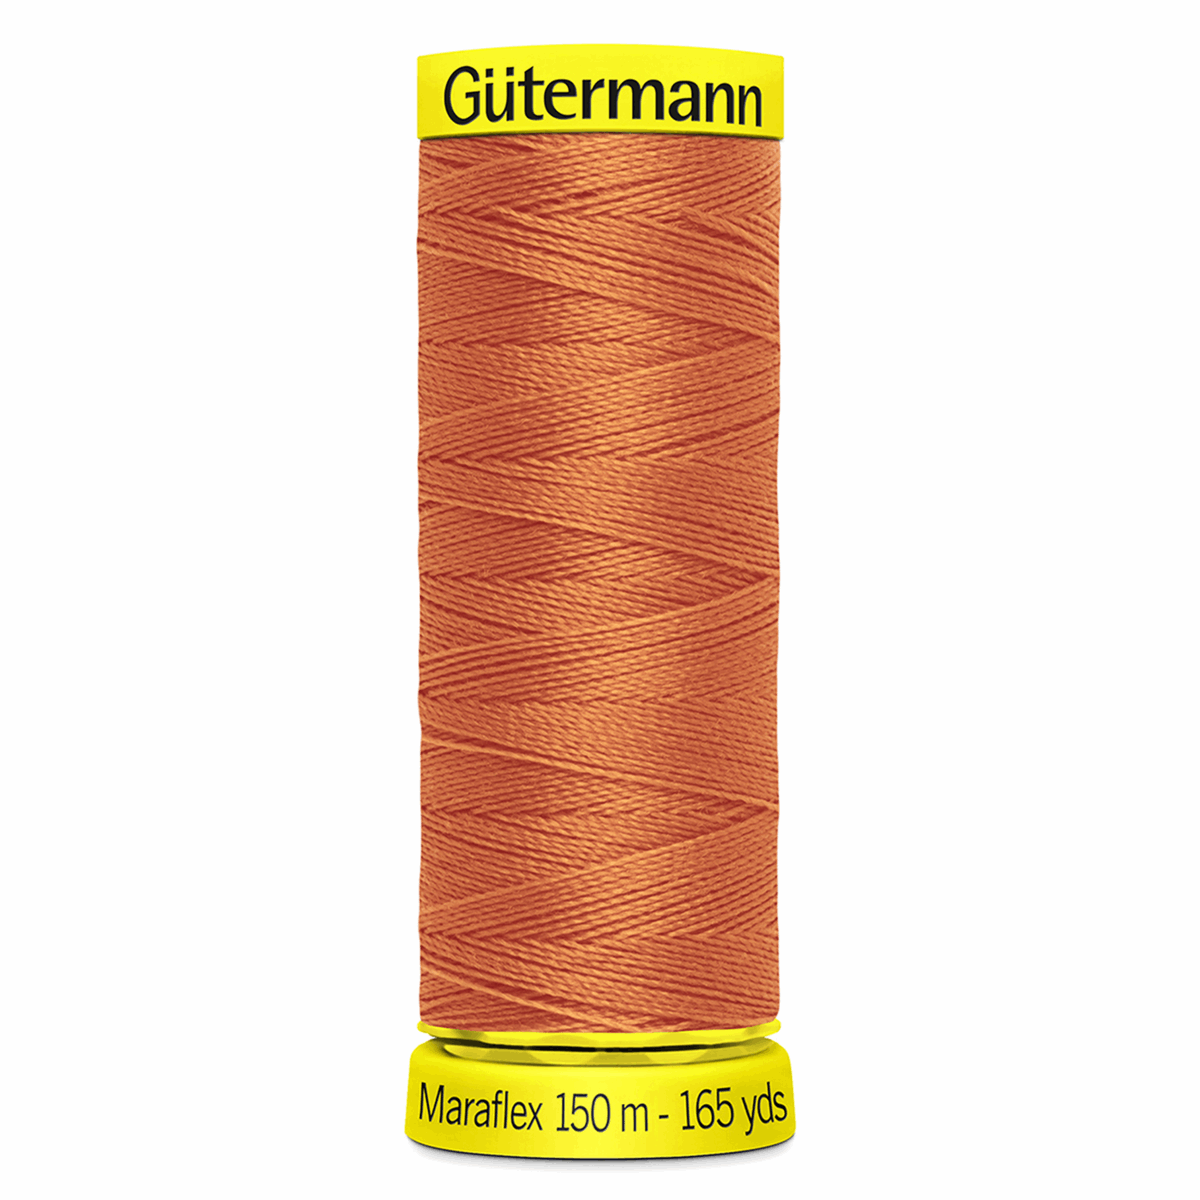 Gutermann Maraflex Elastic Sewing Thread 150m Coral 982